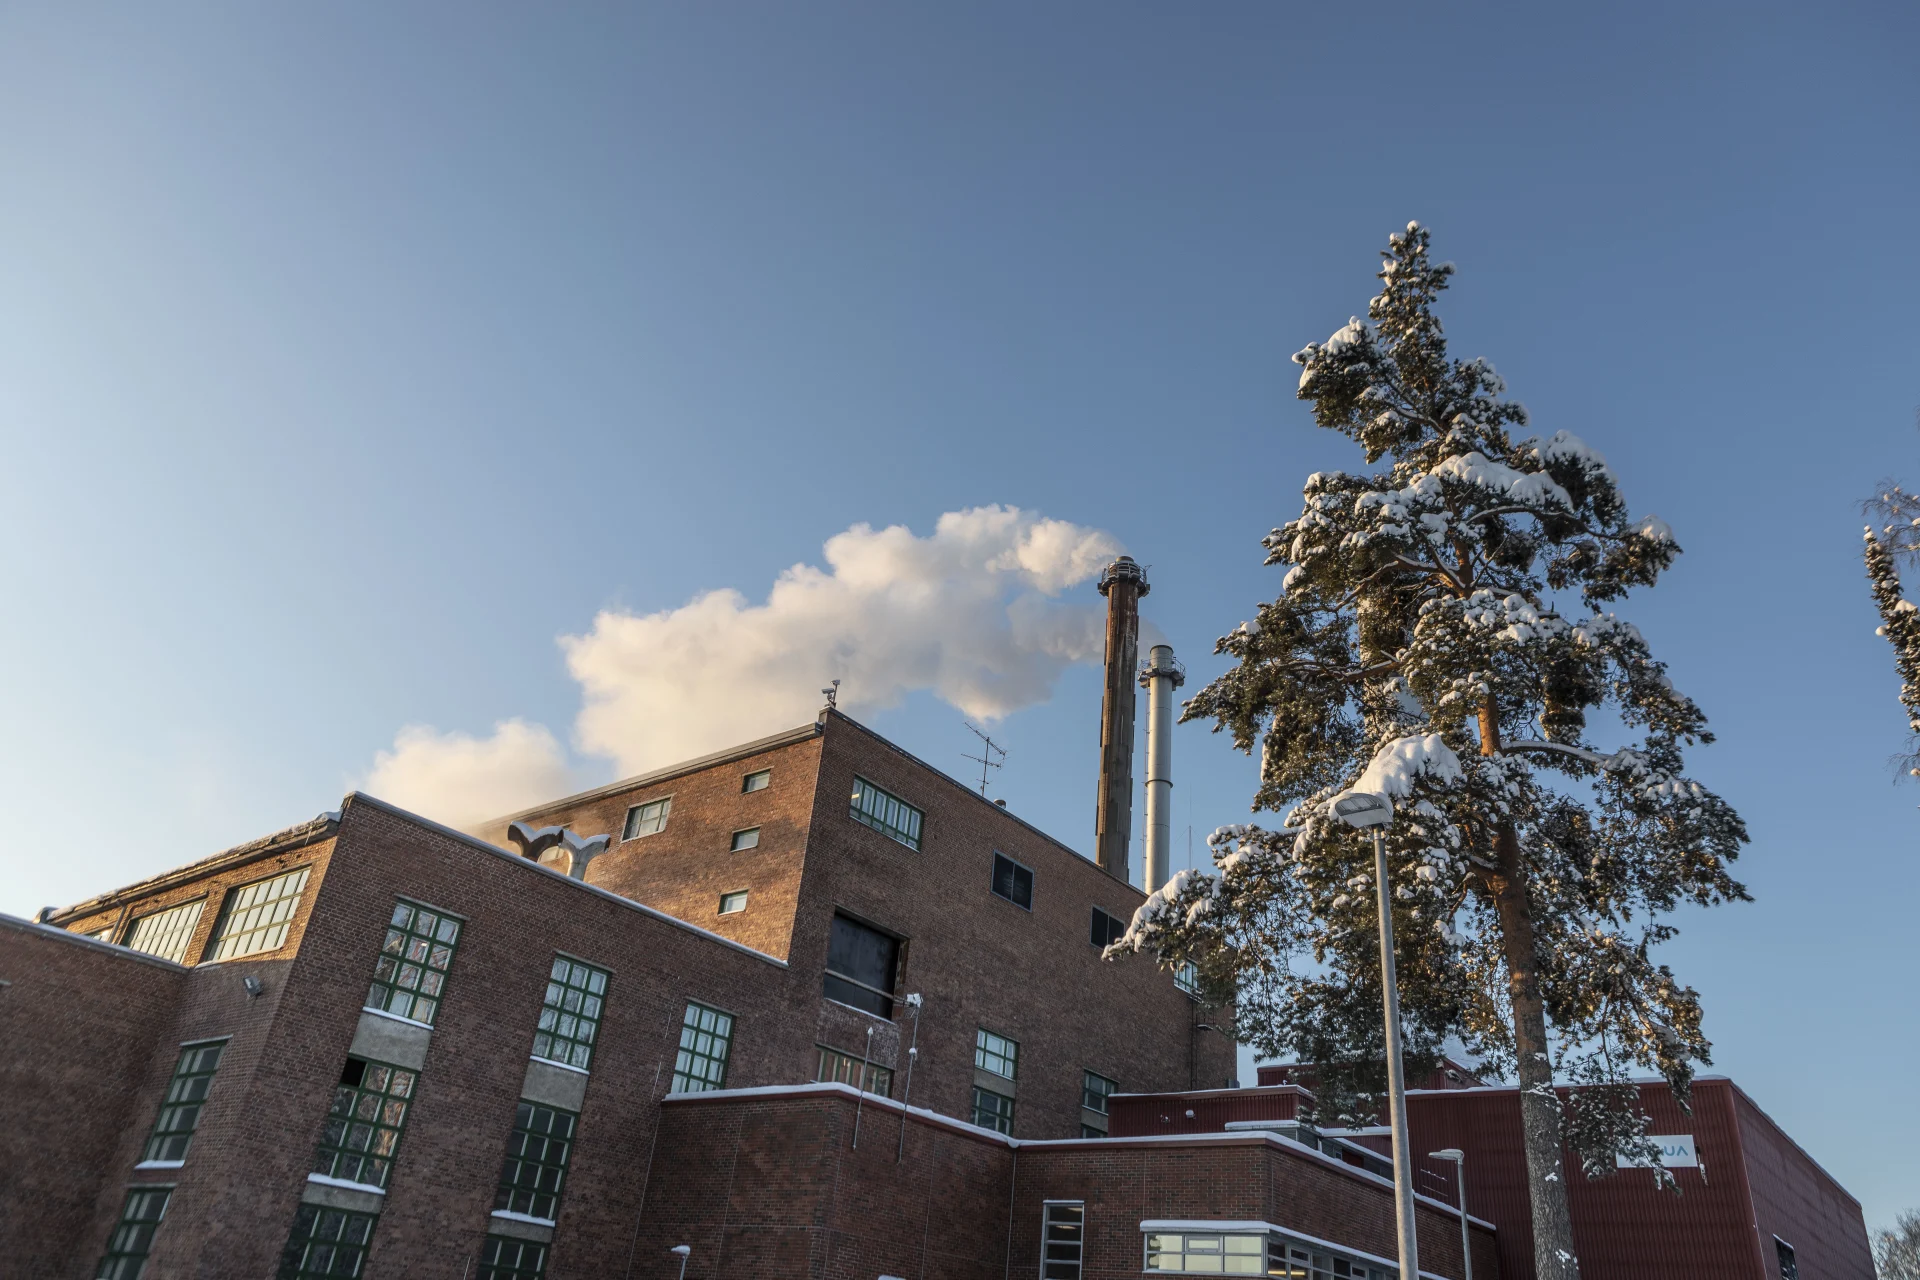 Loimua district heating plant in winter, blue sky in the background.